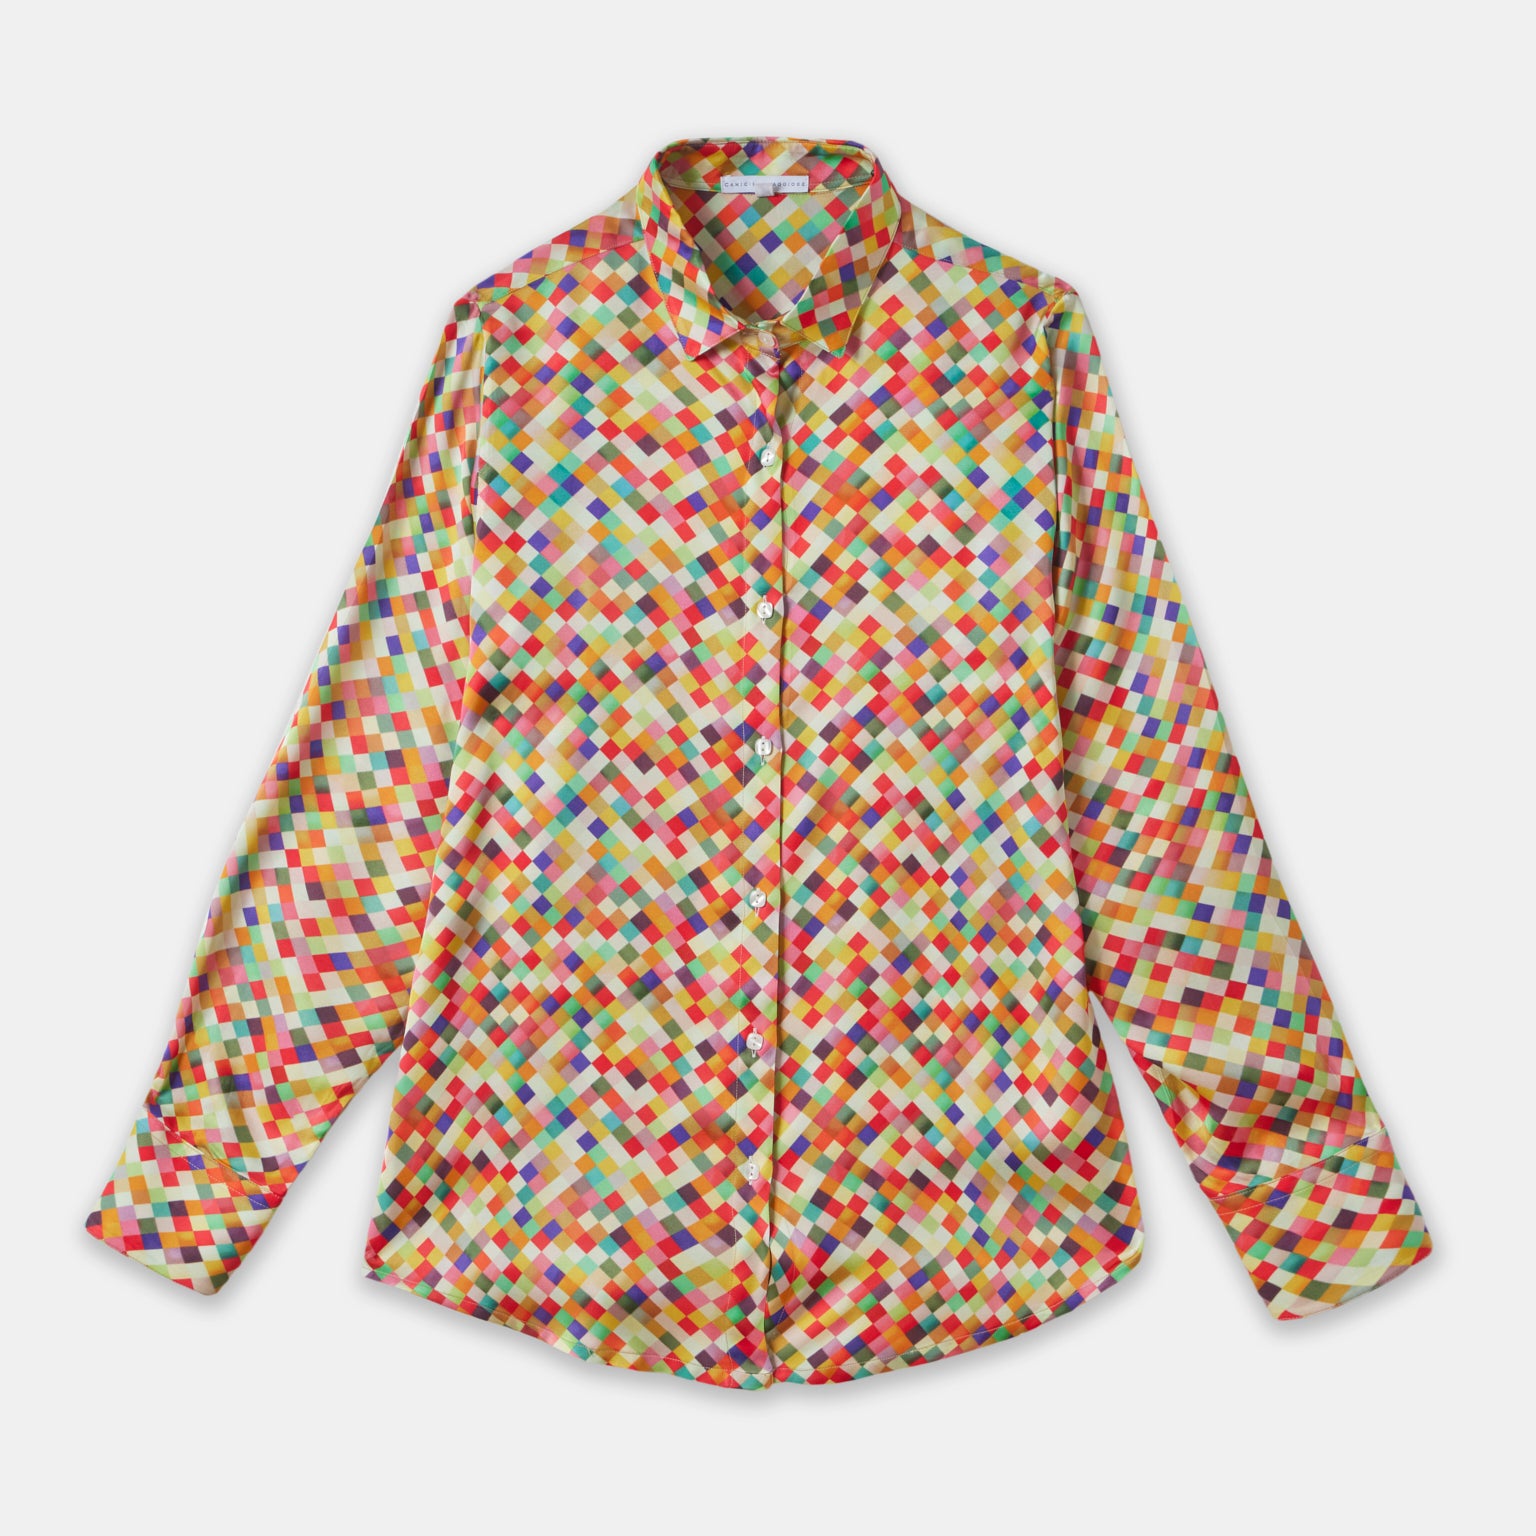 BraveShirts  The joy of color meets Italian style – Camiciecoraggiose -  Braveshirts